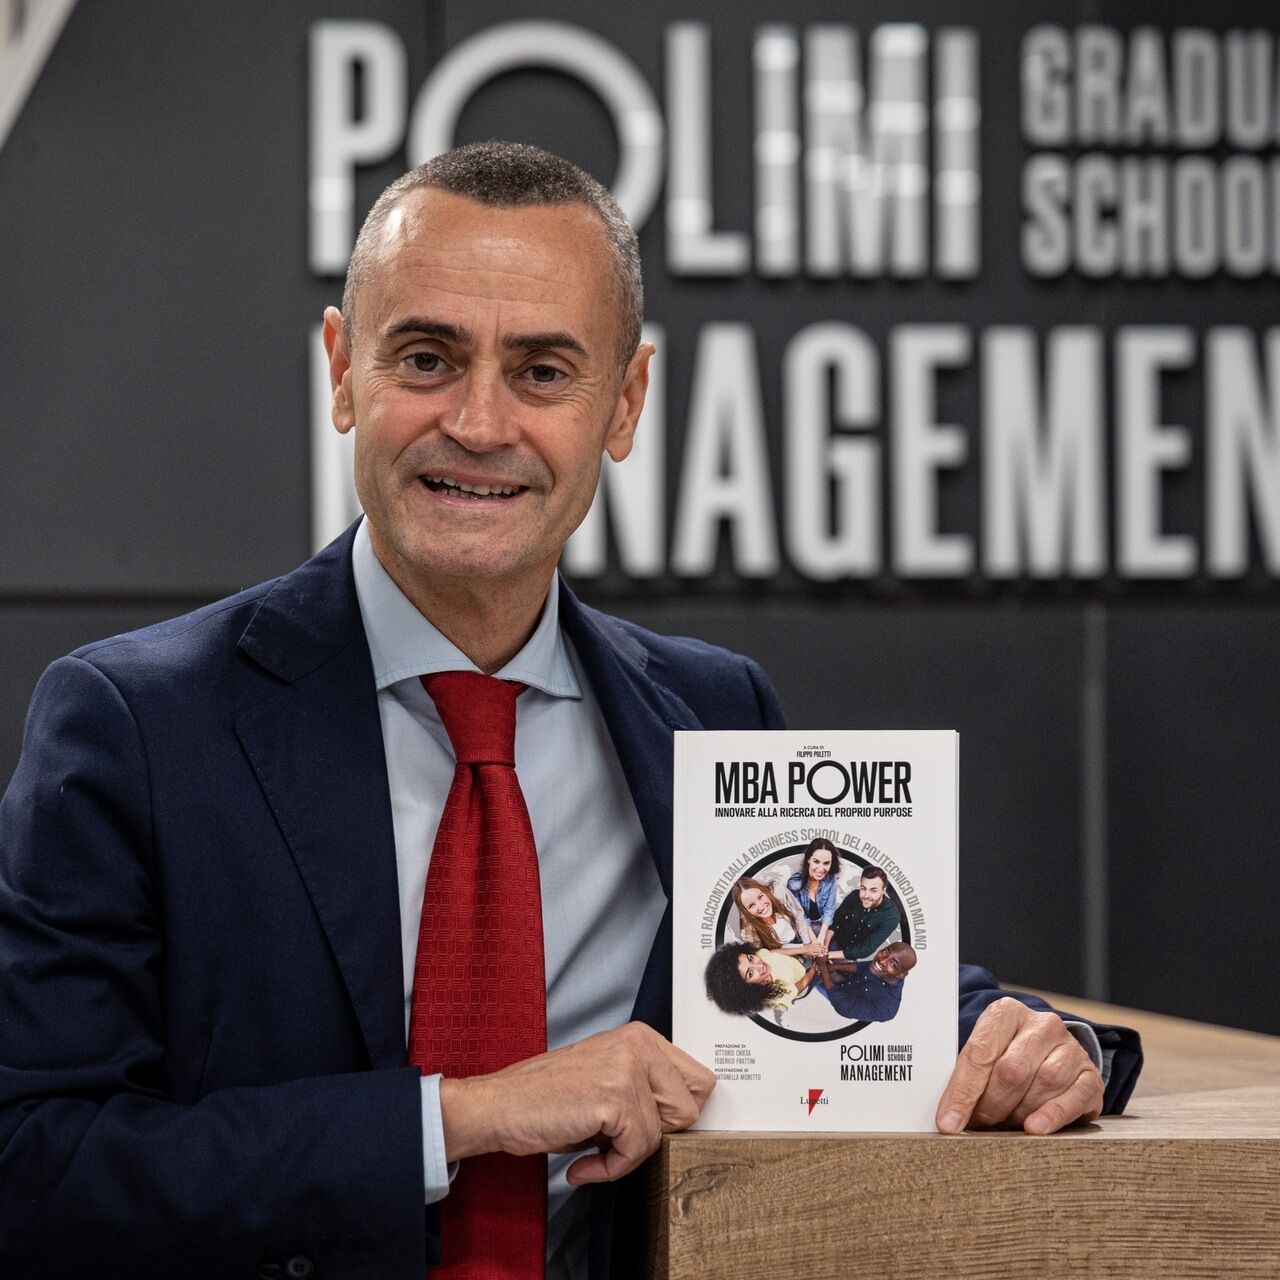 MBA 파워: 전문 저널리스트인 Filippo Poletti는 "MBA 파워: 목적을 찾아 혁신하기"라는 책의 저자입니다.